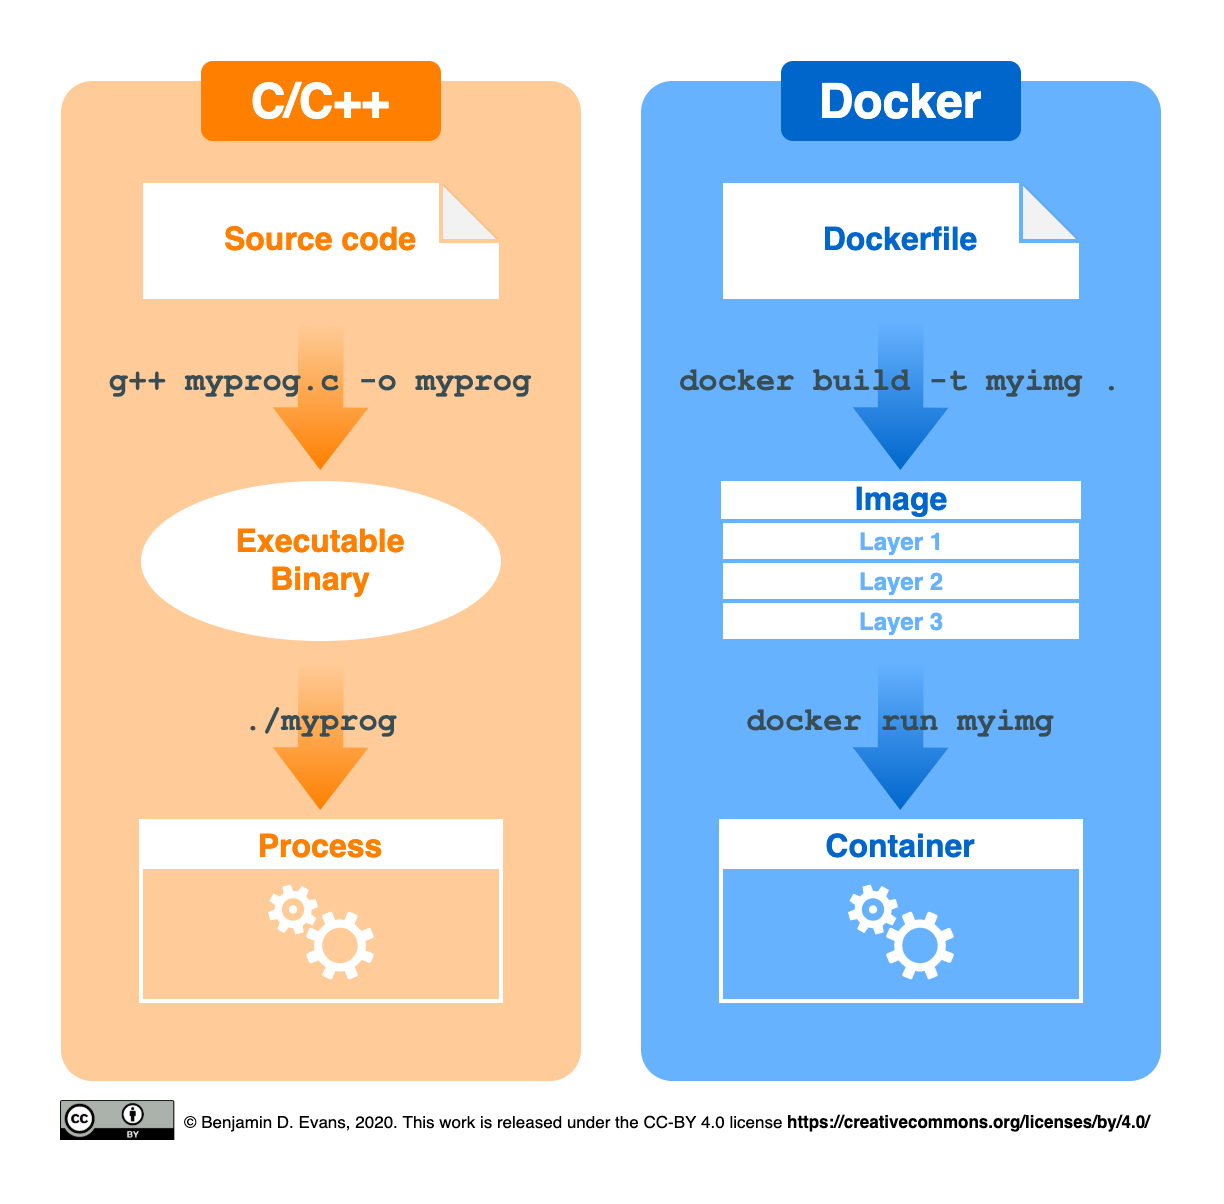 Docker analogy